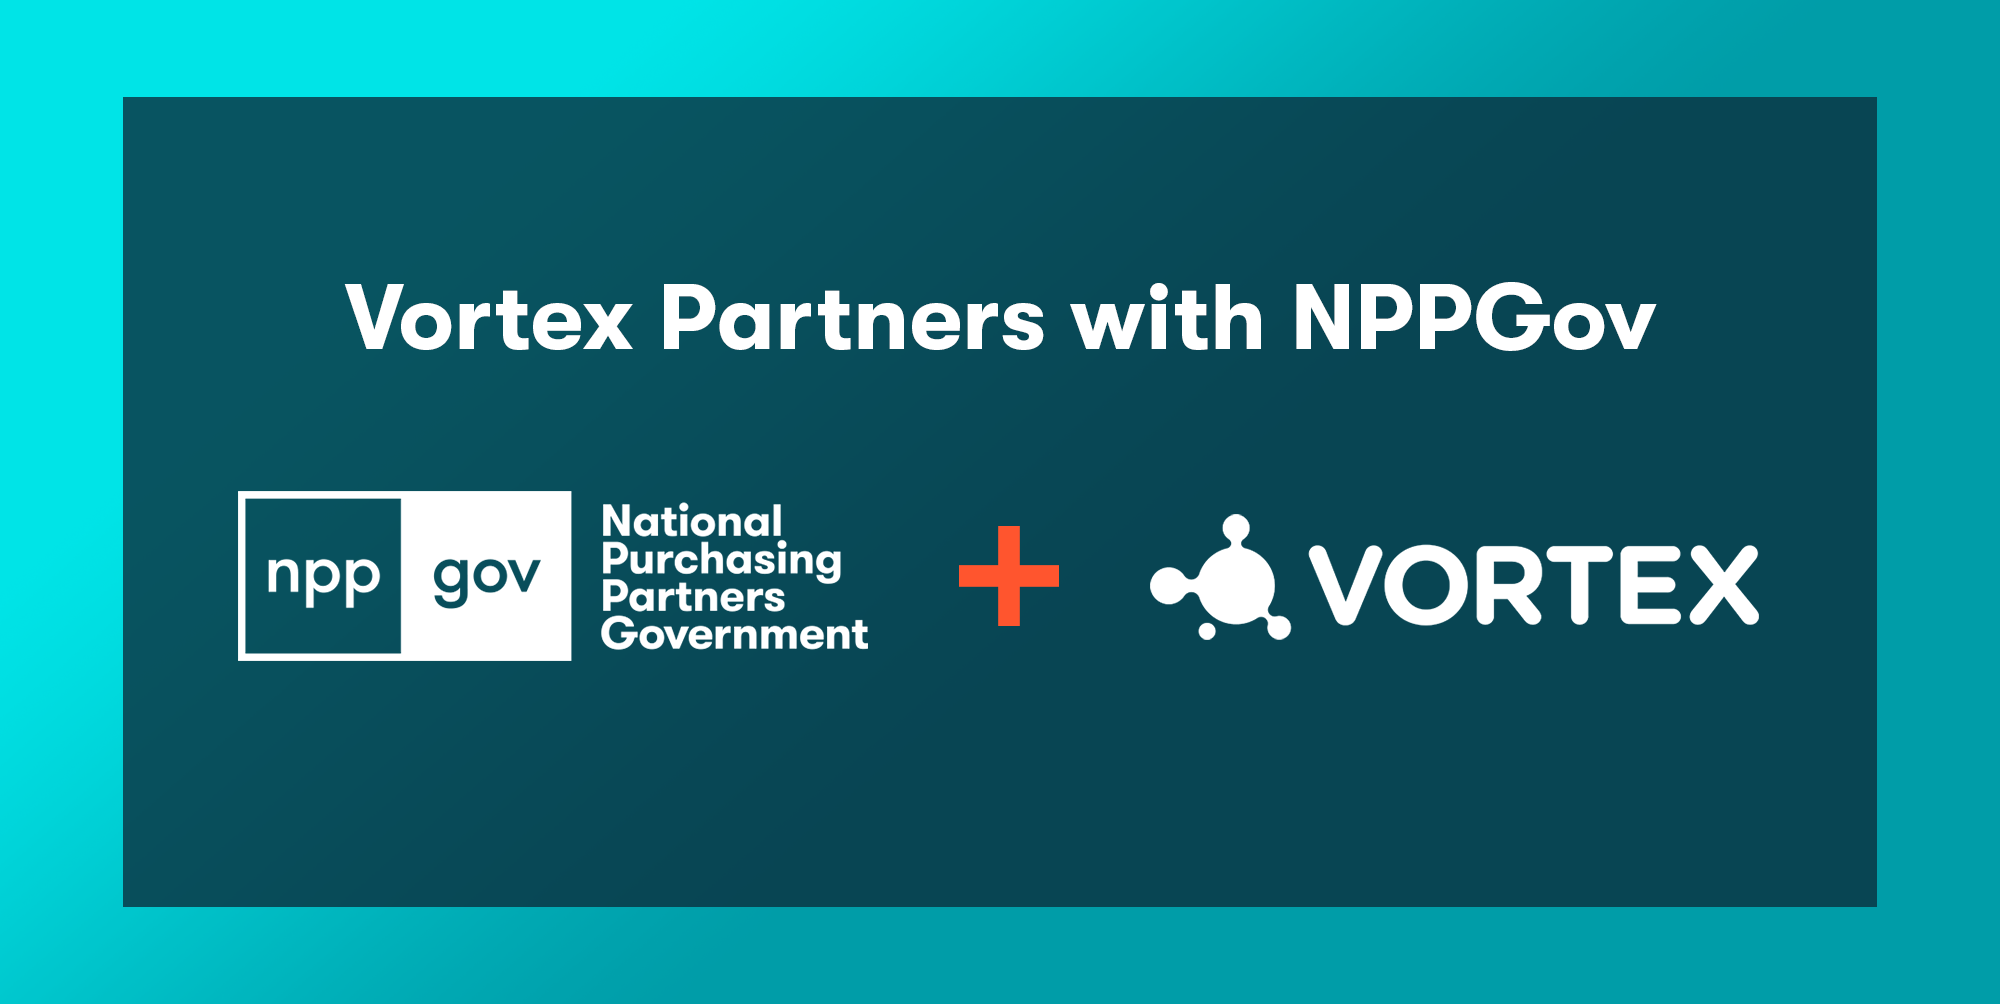 Vortex Partners with NPPGov